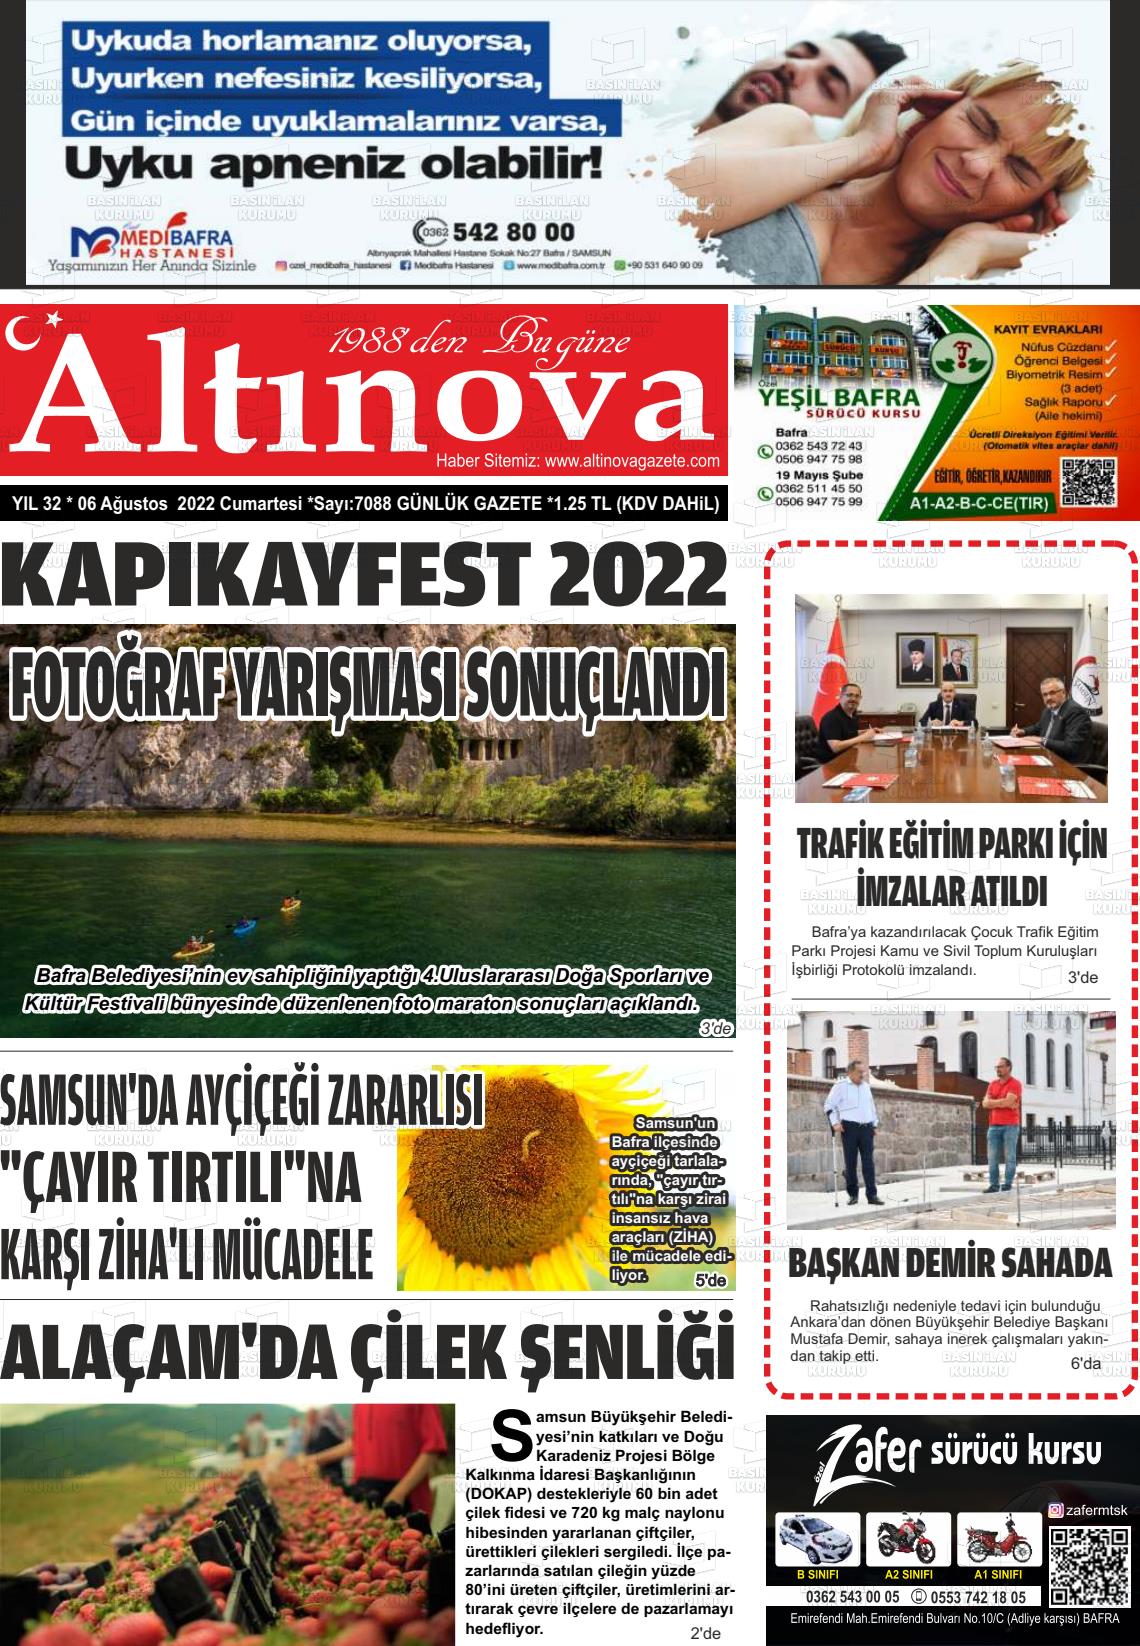 06 Ağustos 2022 Altınova Gazete Manşeti